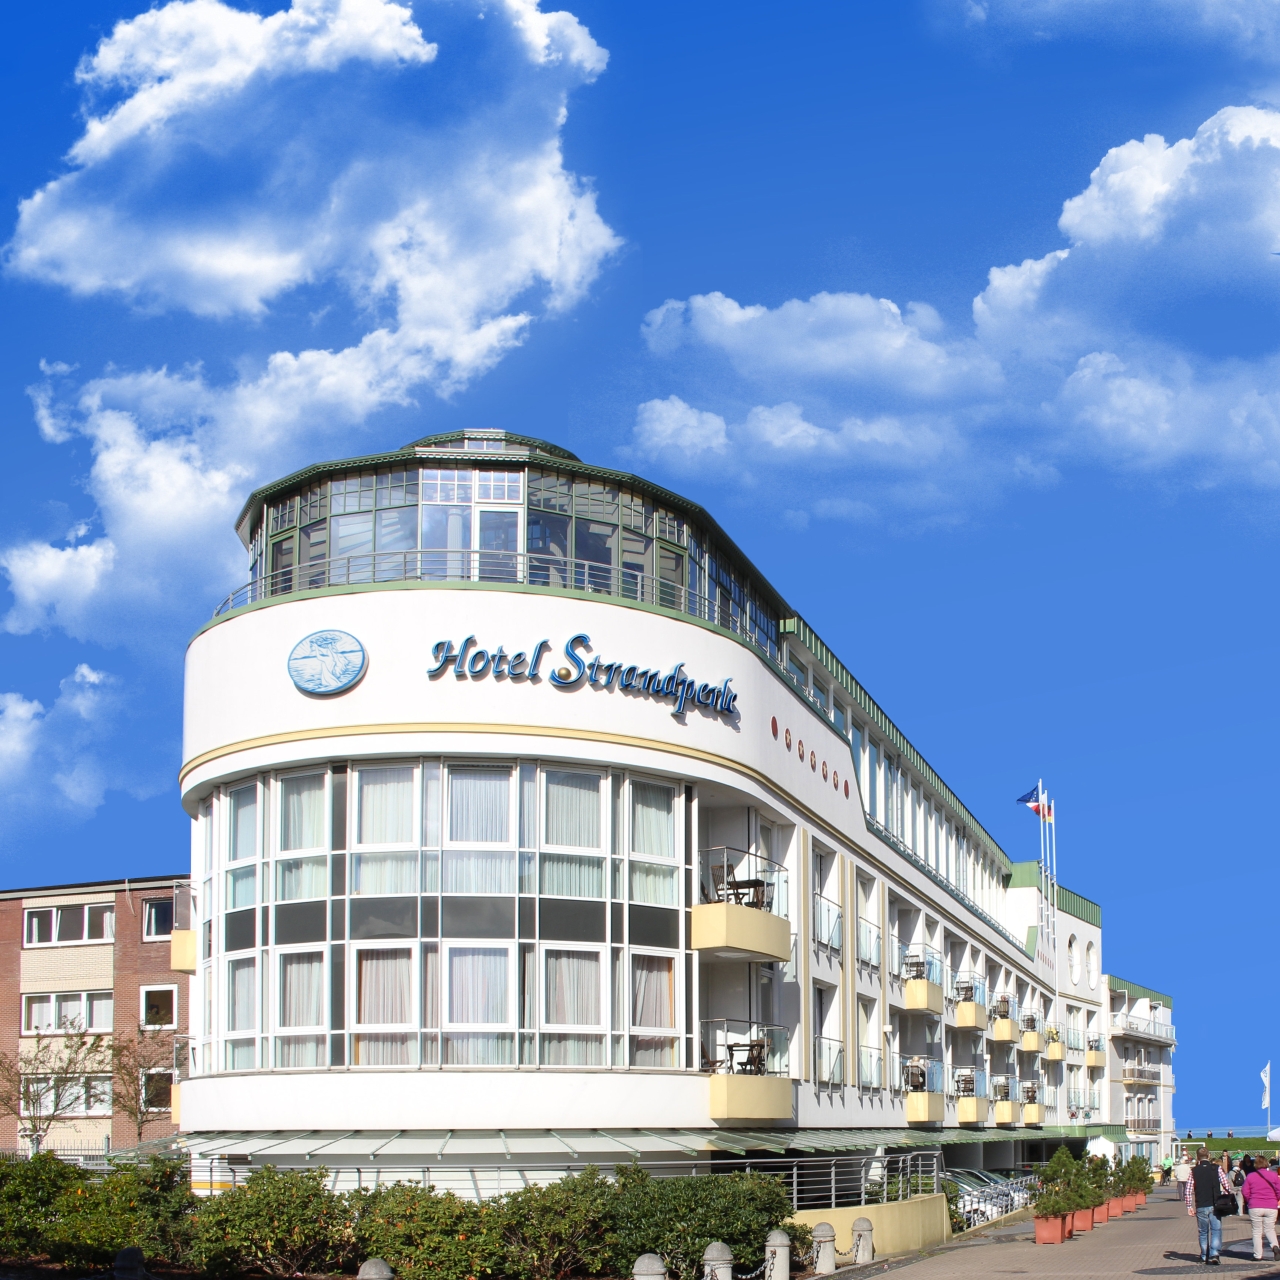 Hotel Strandperle - 5 HRS star hotel in Cuxhaven (Lower Saxony)